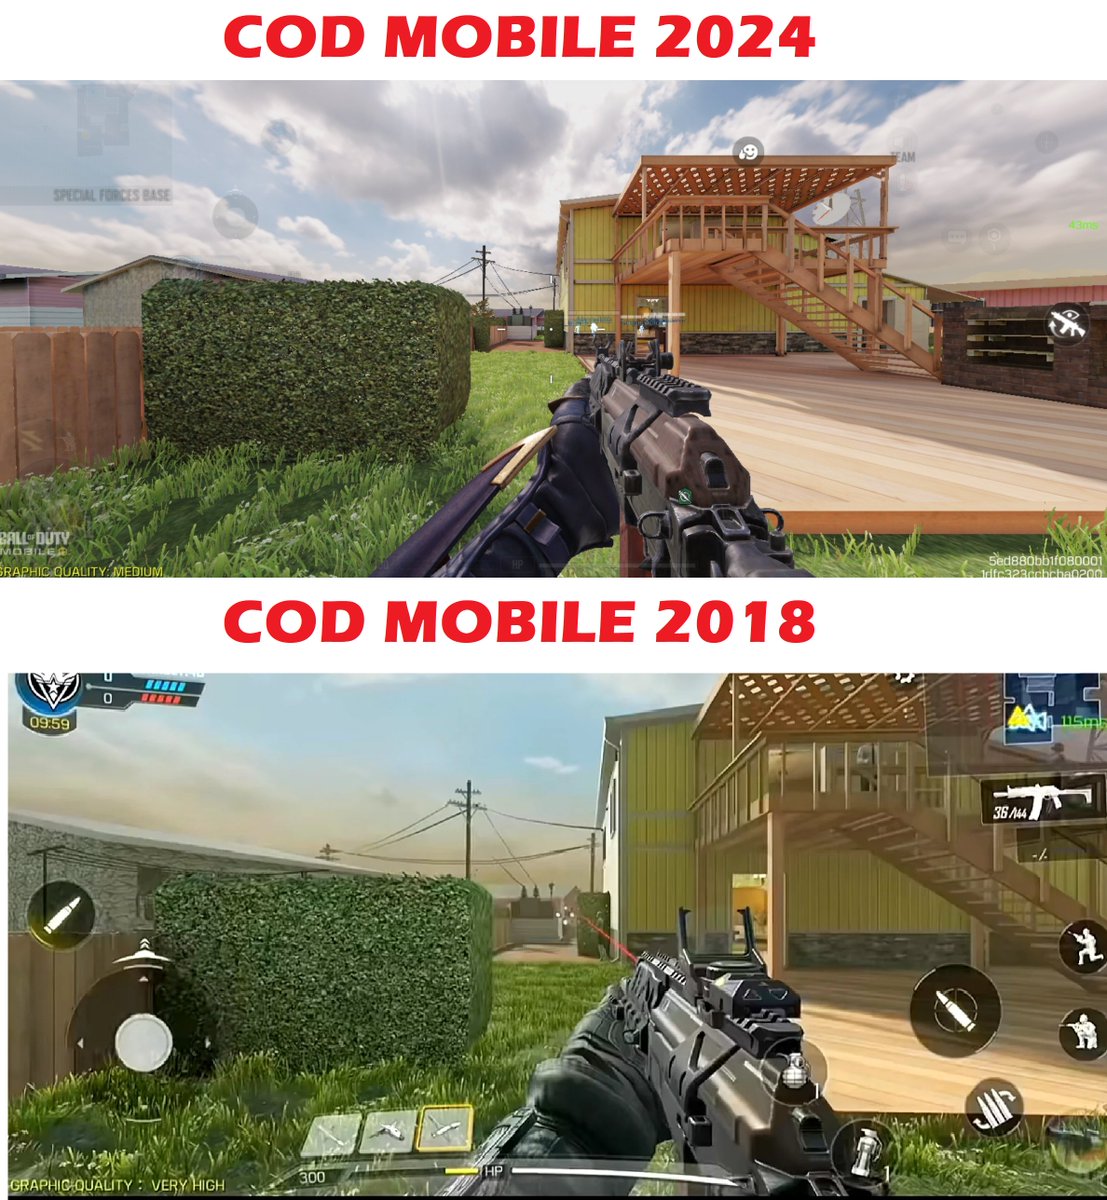 Evolution of COD Mobile..